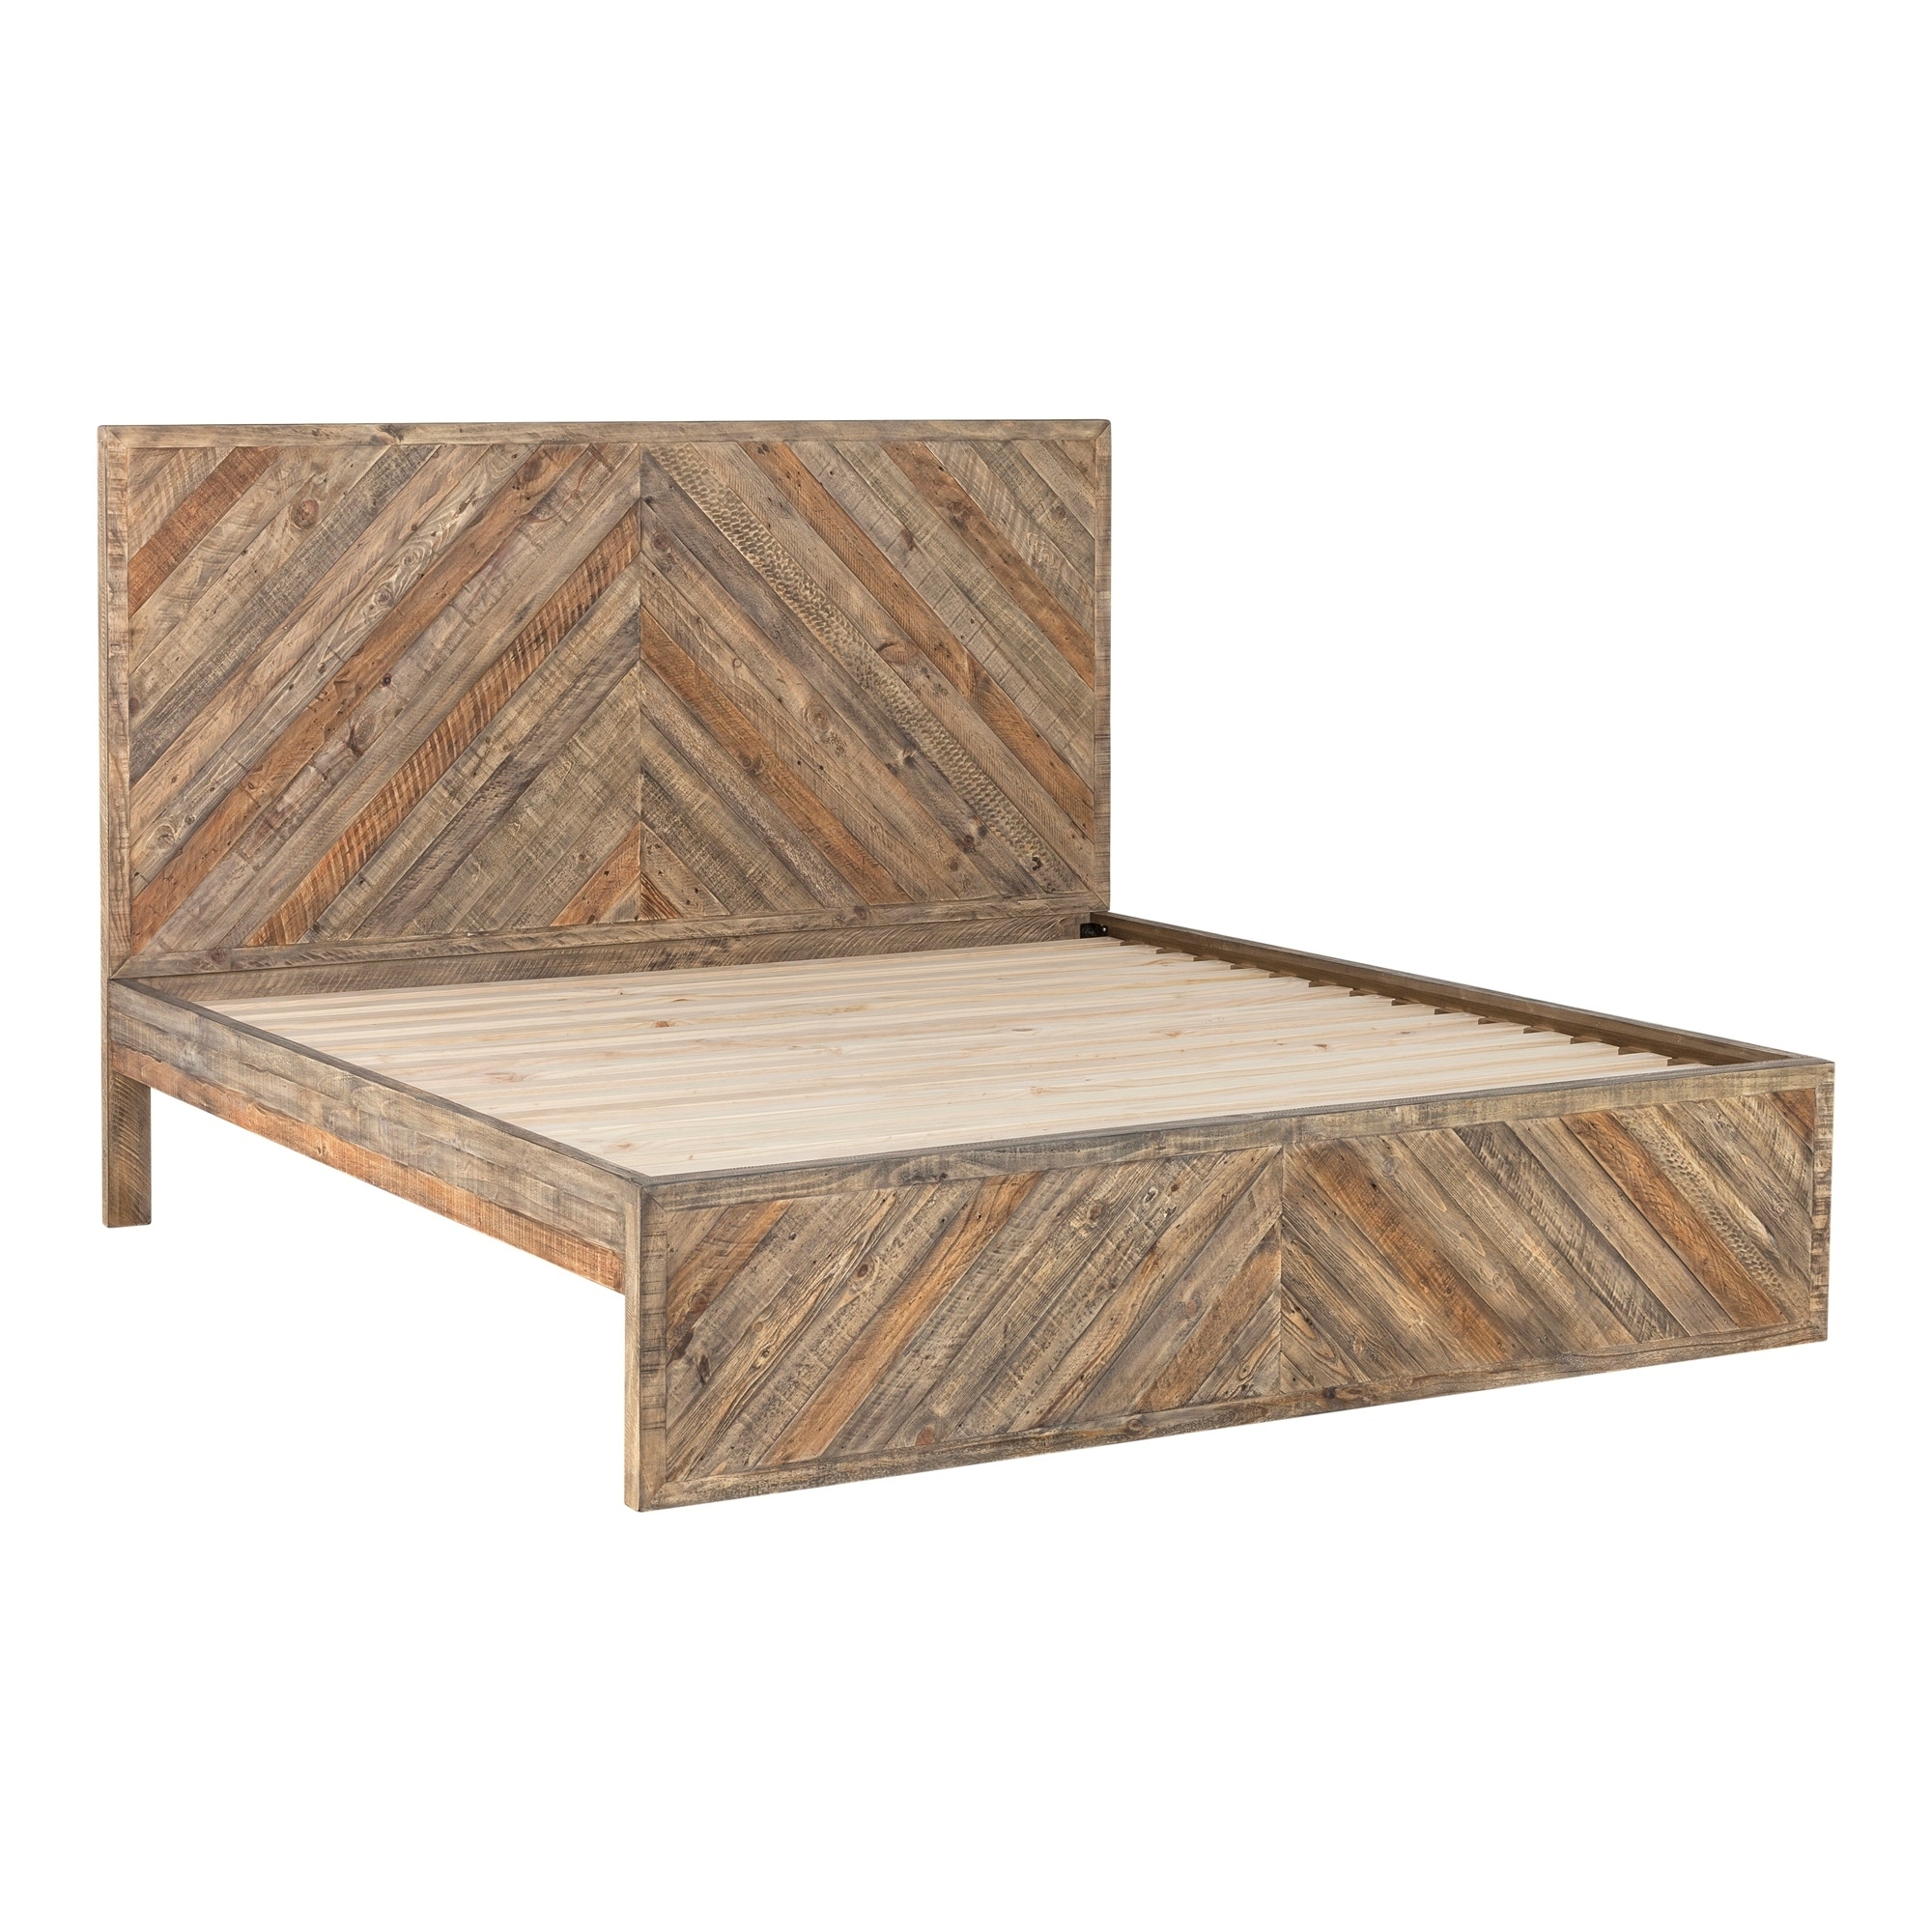 Aurelle Home Reclaimed Wood Queen Modern Platform Bed On Sale Overstock 28338696